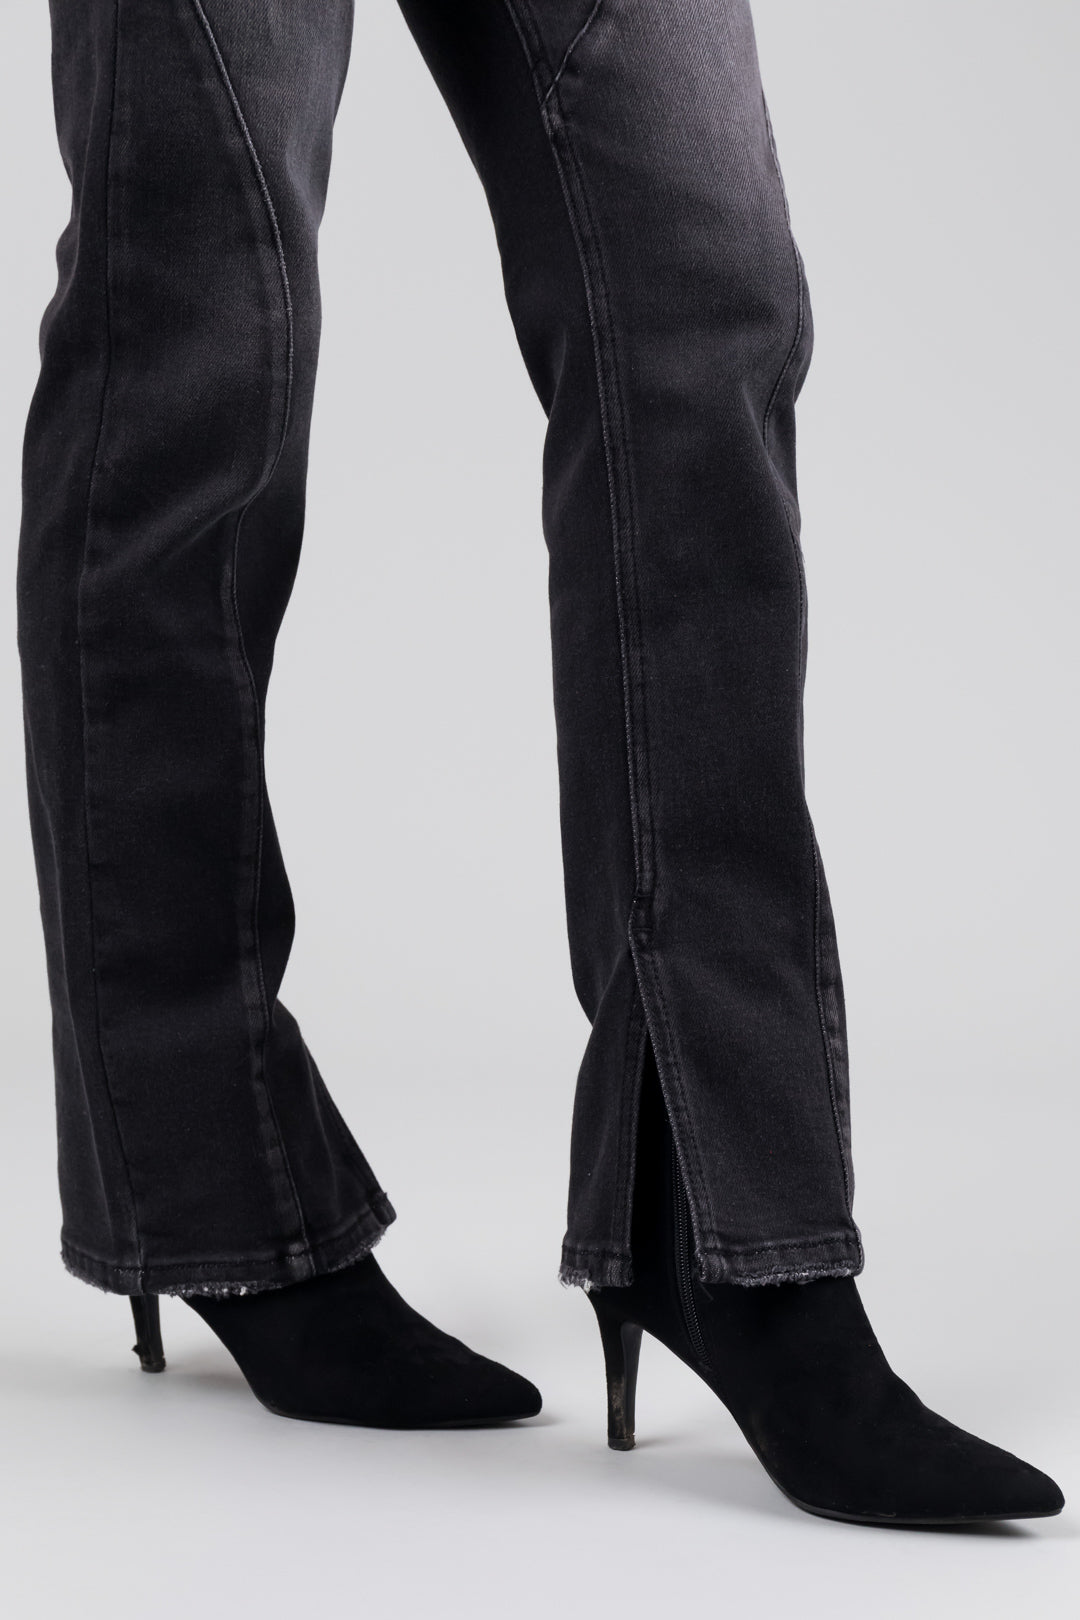 KanCan Black Straight Leg Seam Detail Jeans | Lime Lush